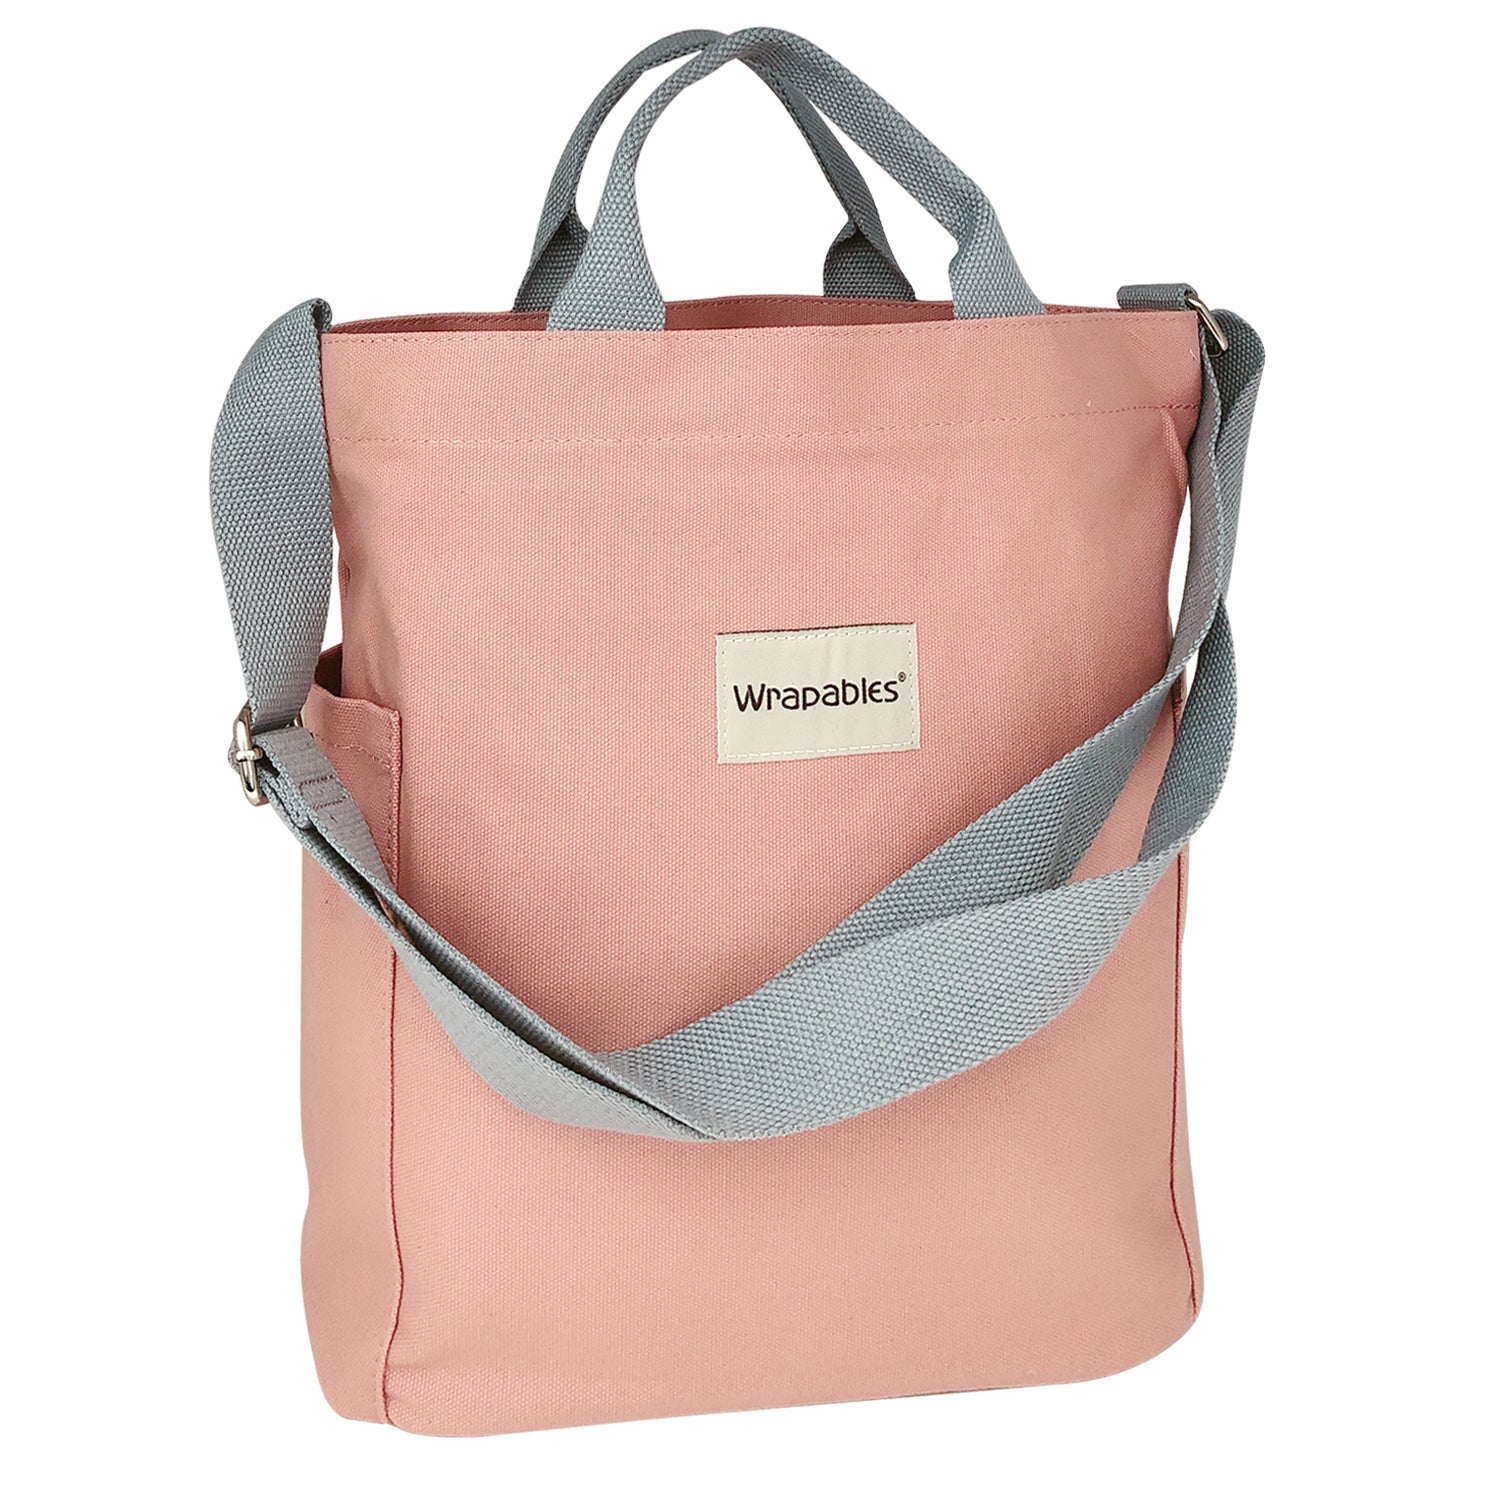 Wrapables Light Pink Corduroy Tote Bag, Casual Everyday Shoulder Handbag